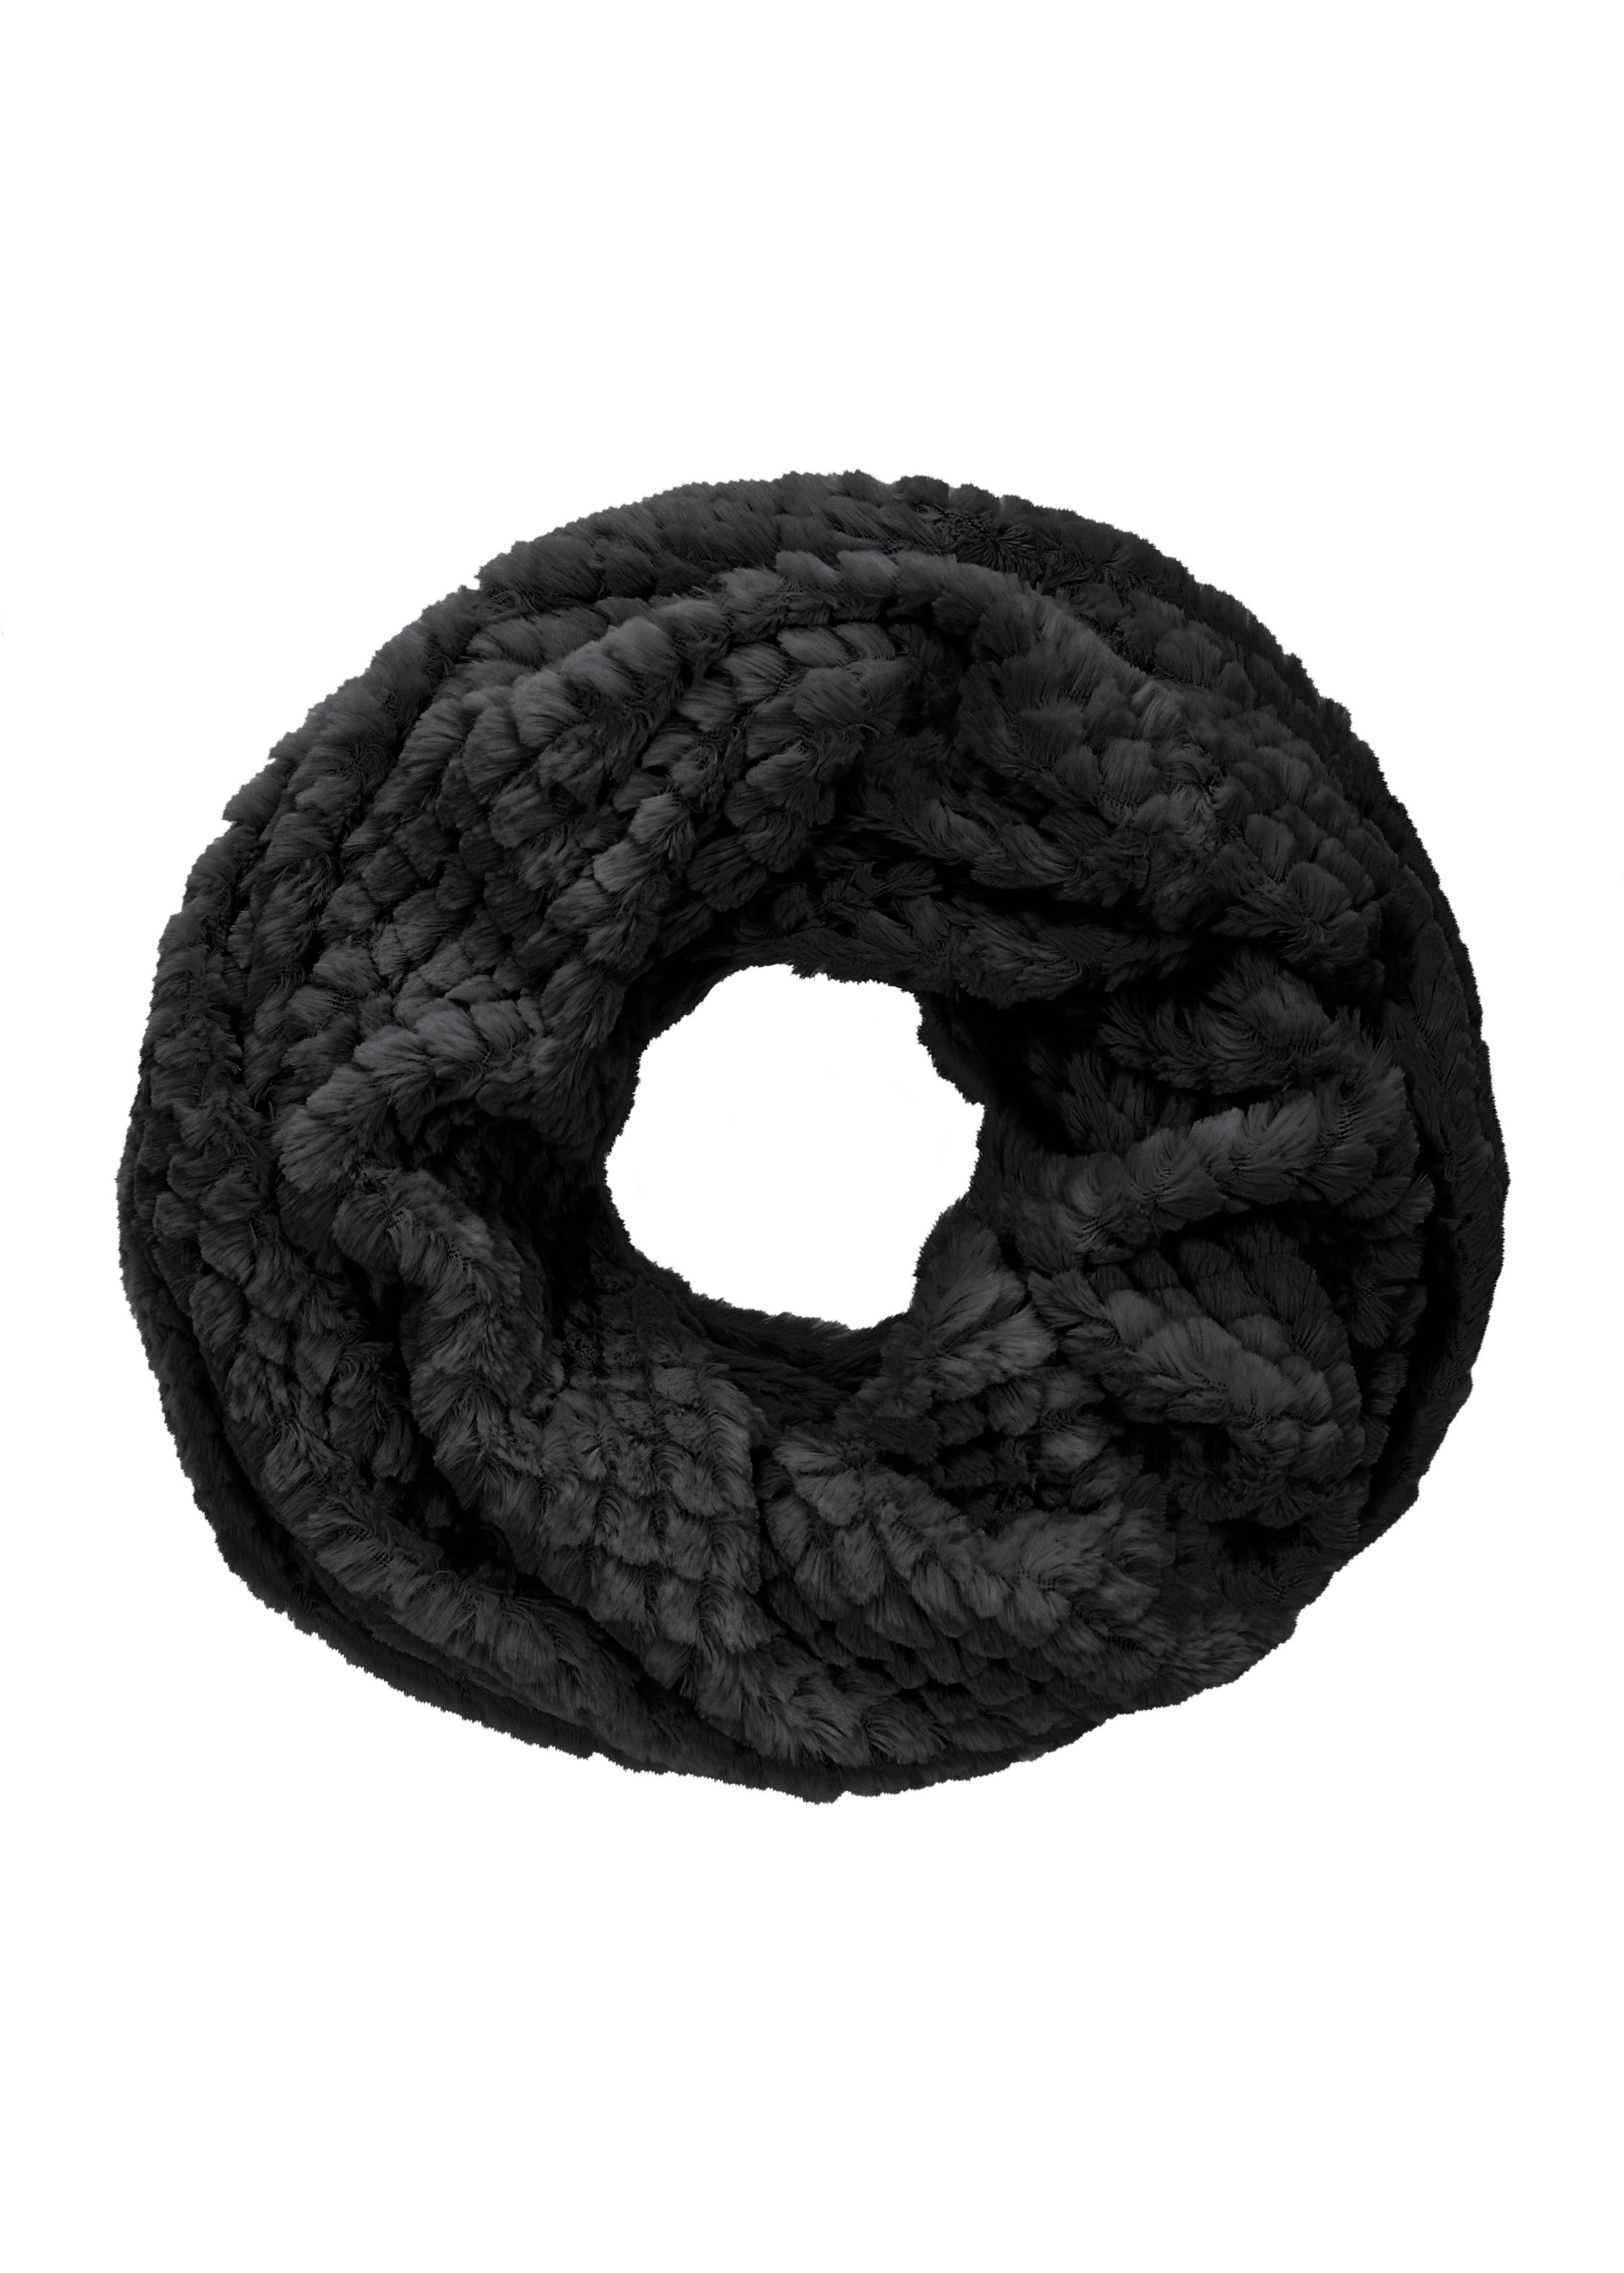 Loop, weiches Material, Grobstrick-Schal aus Fleece, Halswärmer VEGAN